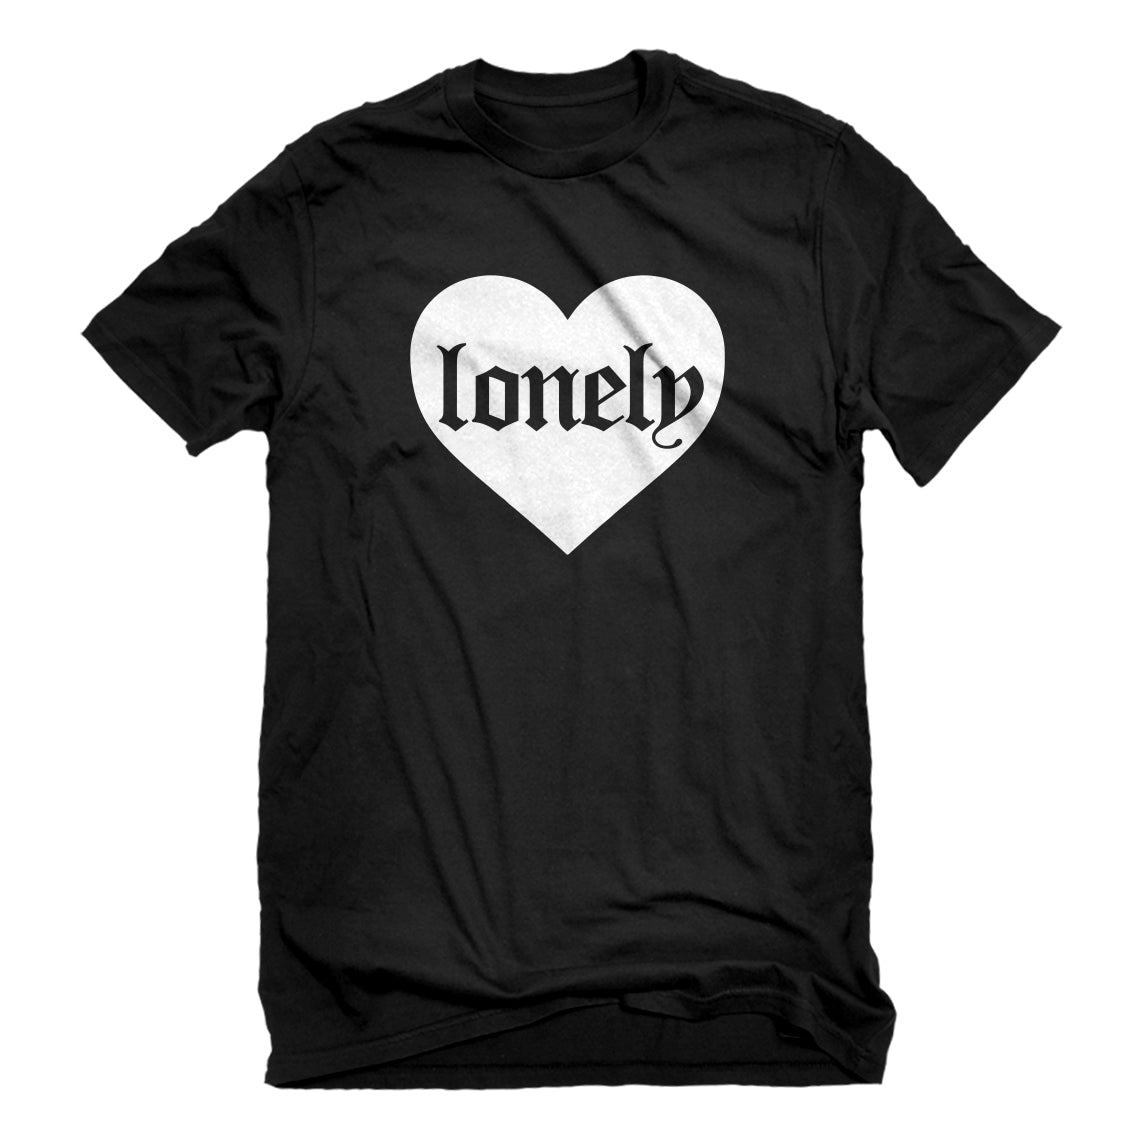 Mens Lonely Unisex T-shirt